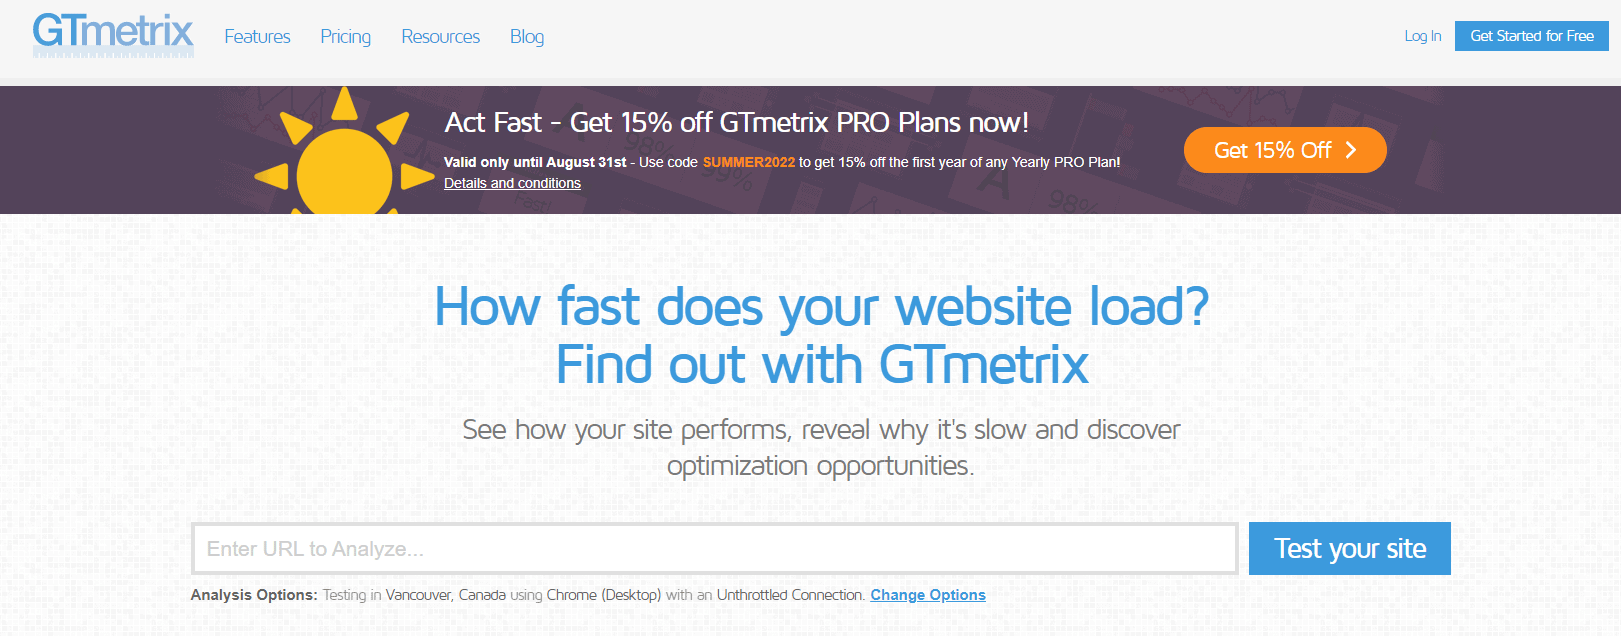 GTmetrix Website Speed Test Tool